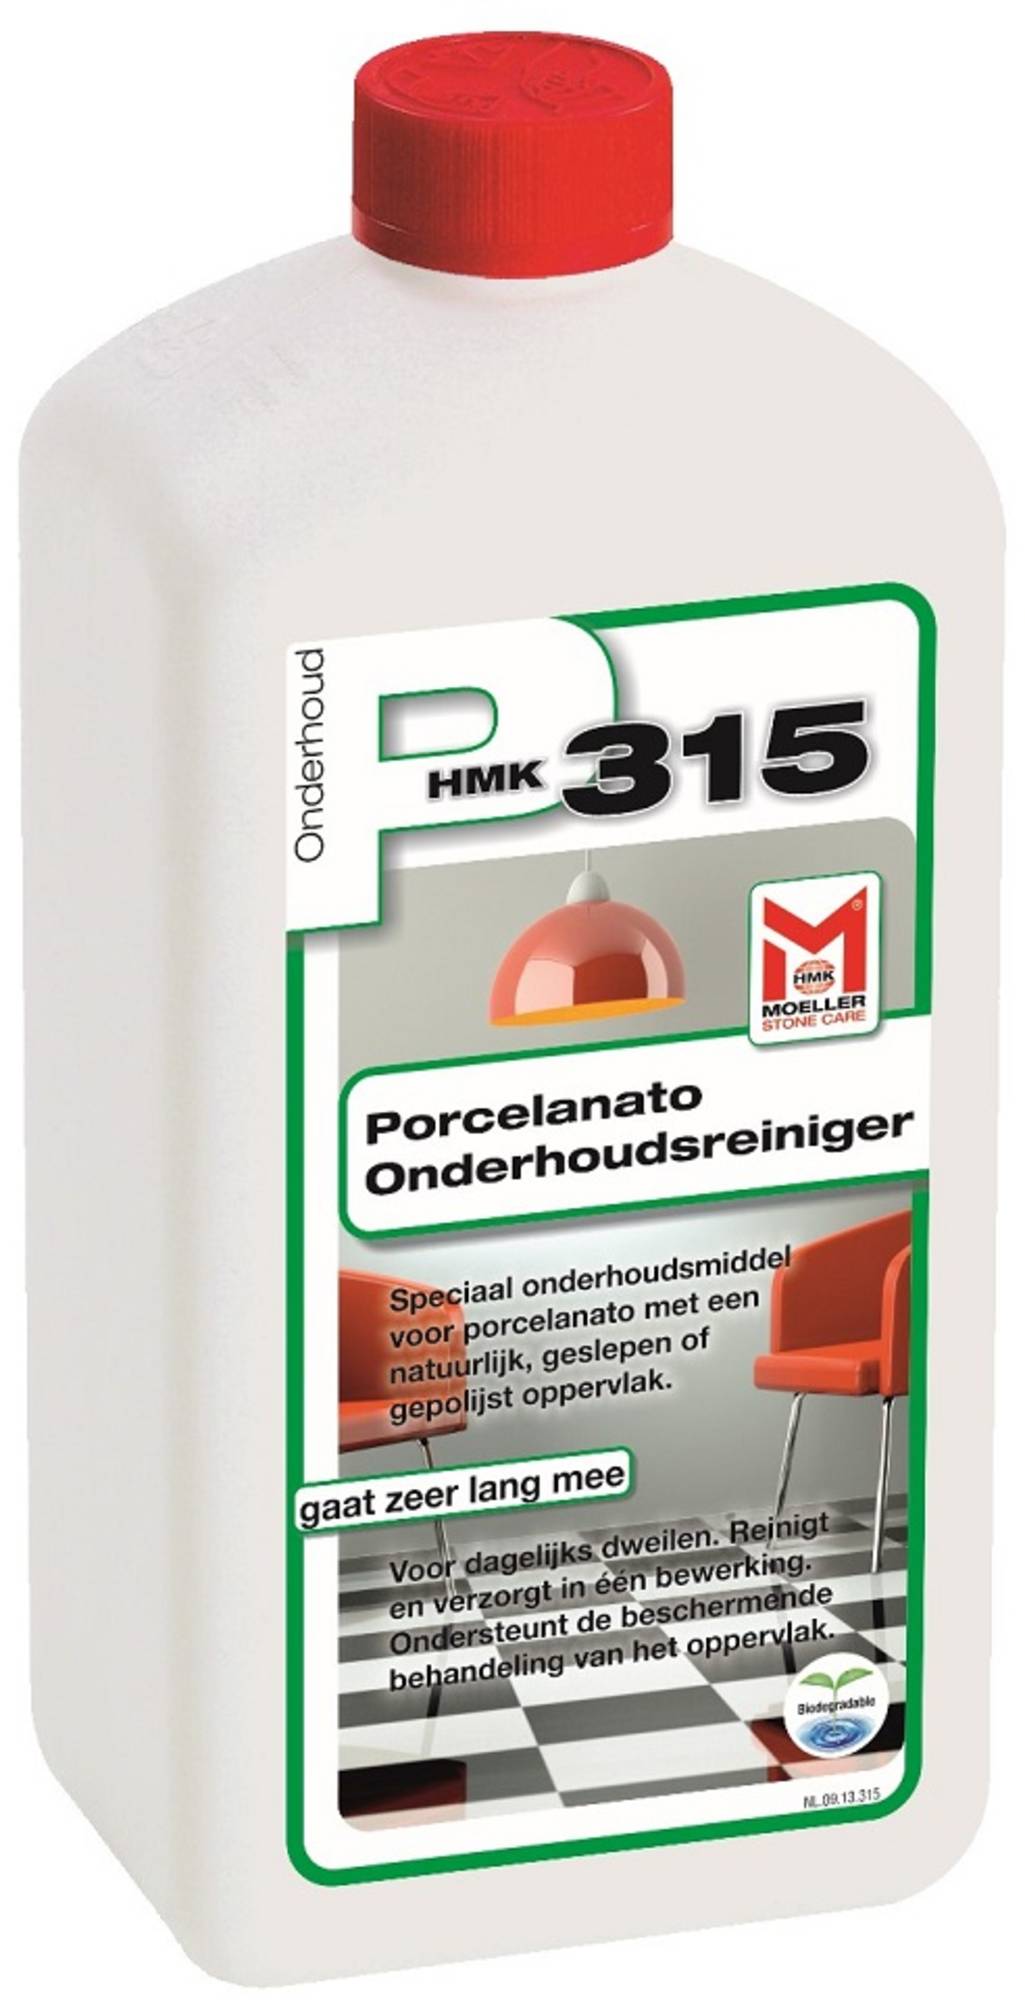 HMK P315 Porcelanato onderhoudsreiniger